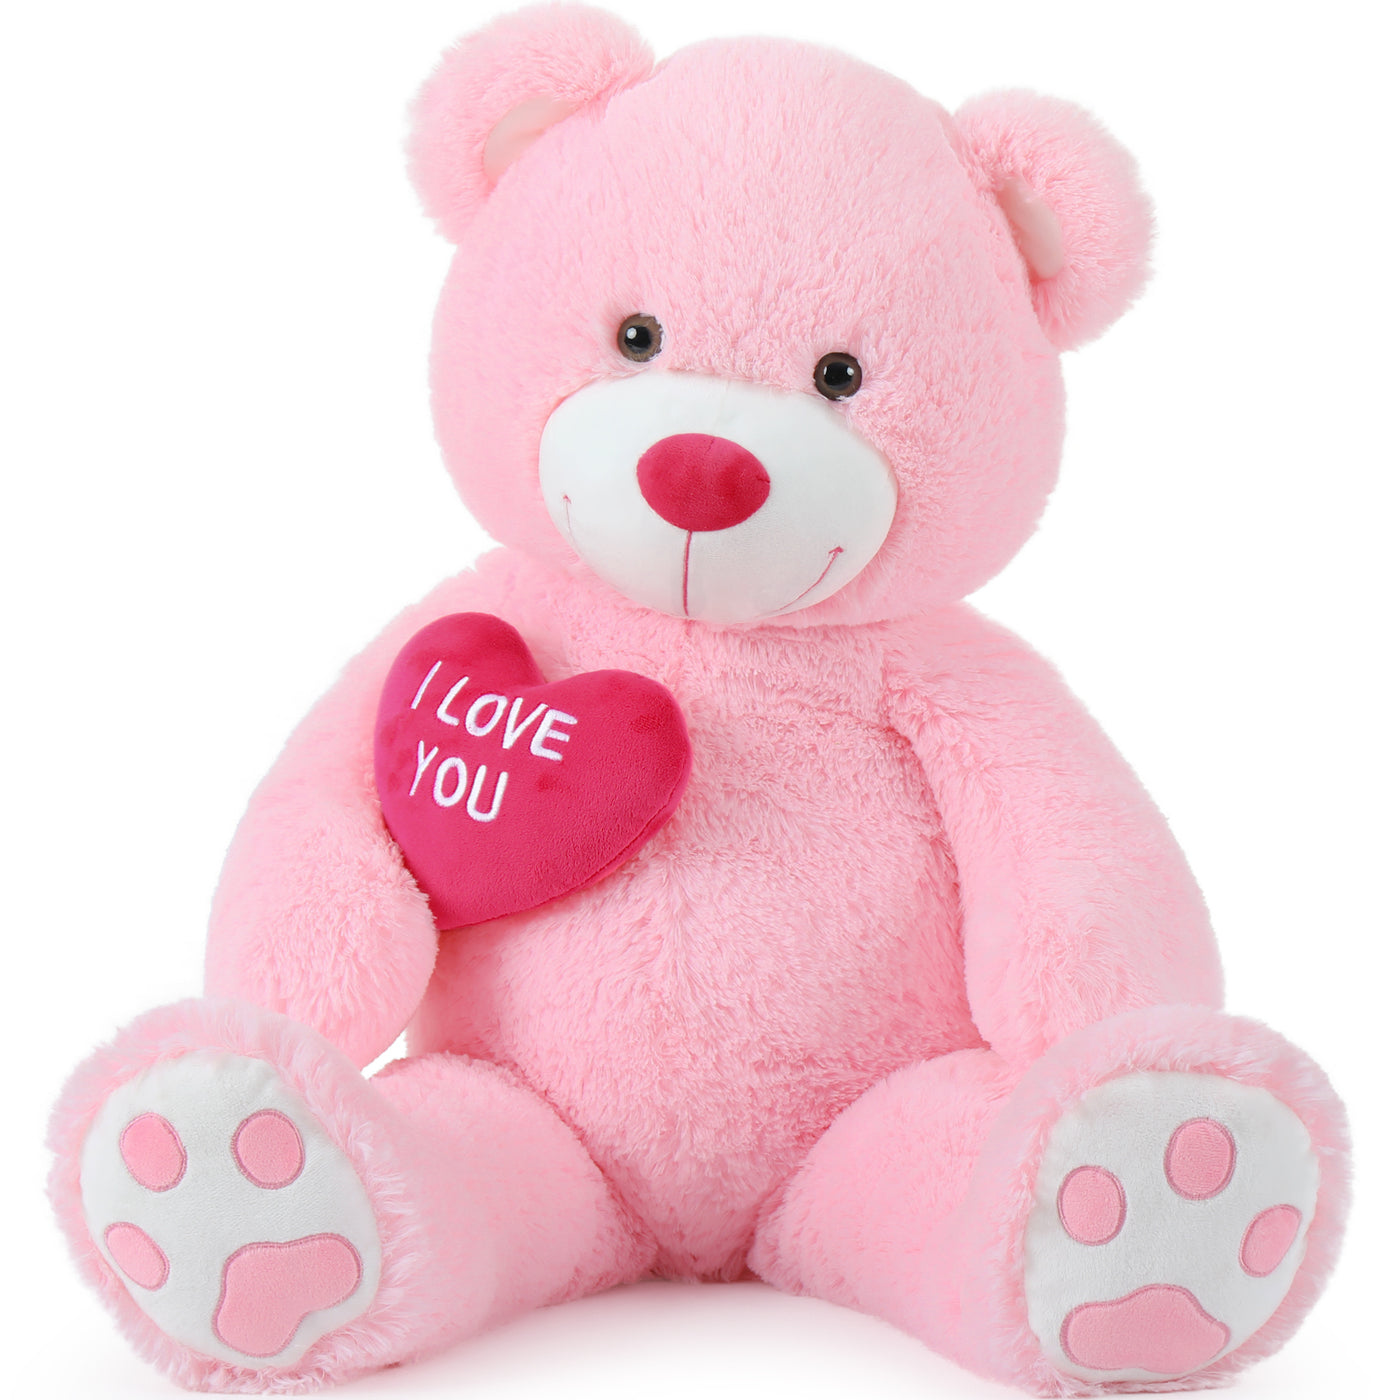 MaoGoLan Big Teddy Bear 4.3ft Stuffed Animal, I Love You Red Heart Giant Pink Teddy Bear Plush Toy, Large Stuffed Animal Gift for Girlfriend, Boyfriend, Kids